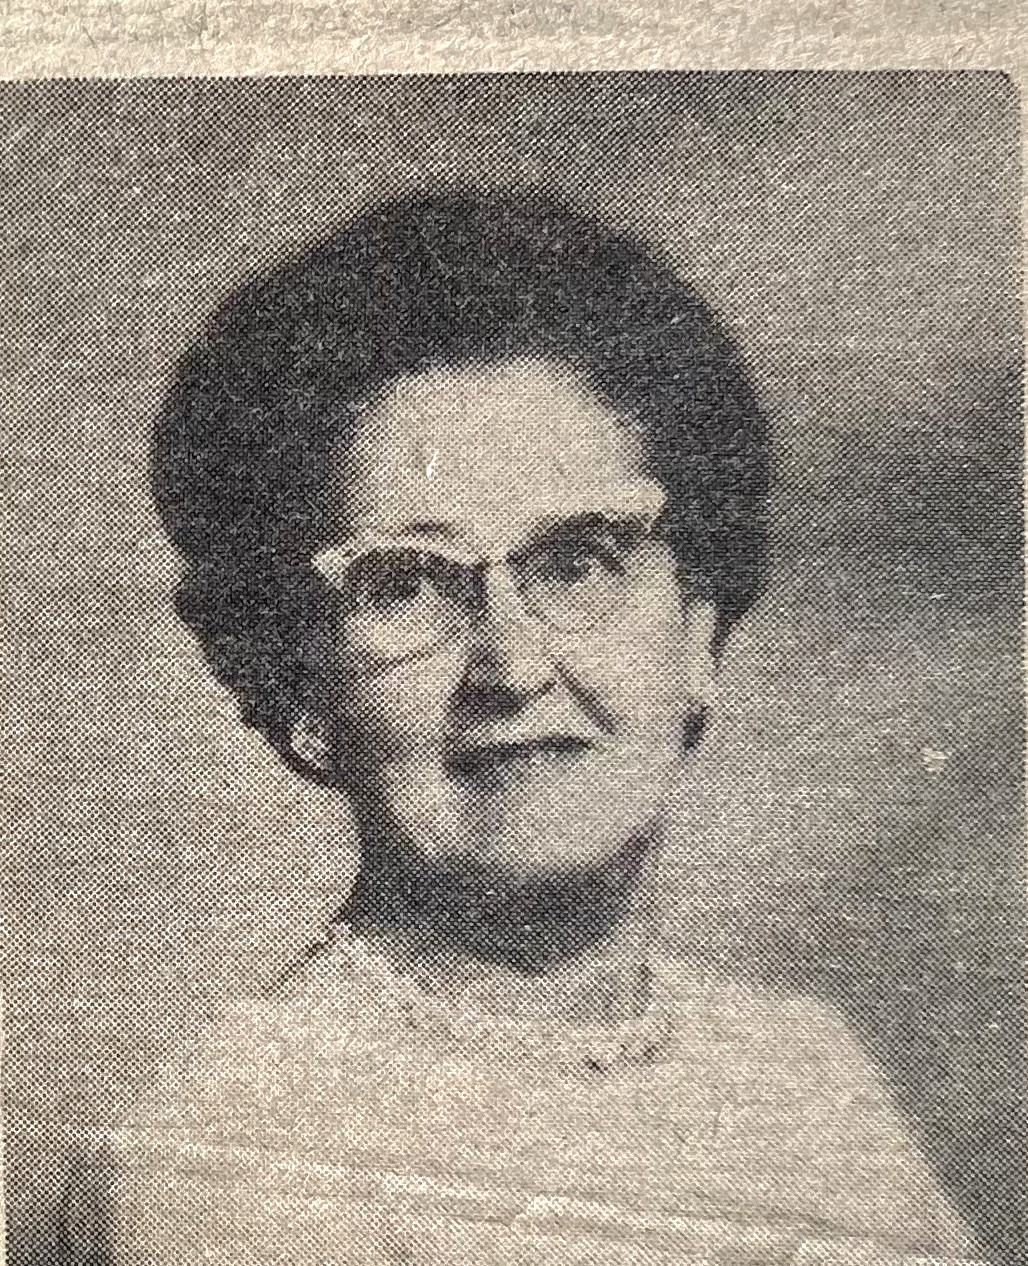 Hilda Peternella Bernards (1909 - 1996) Profile